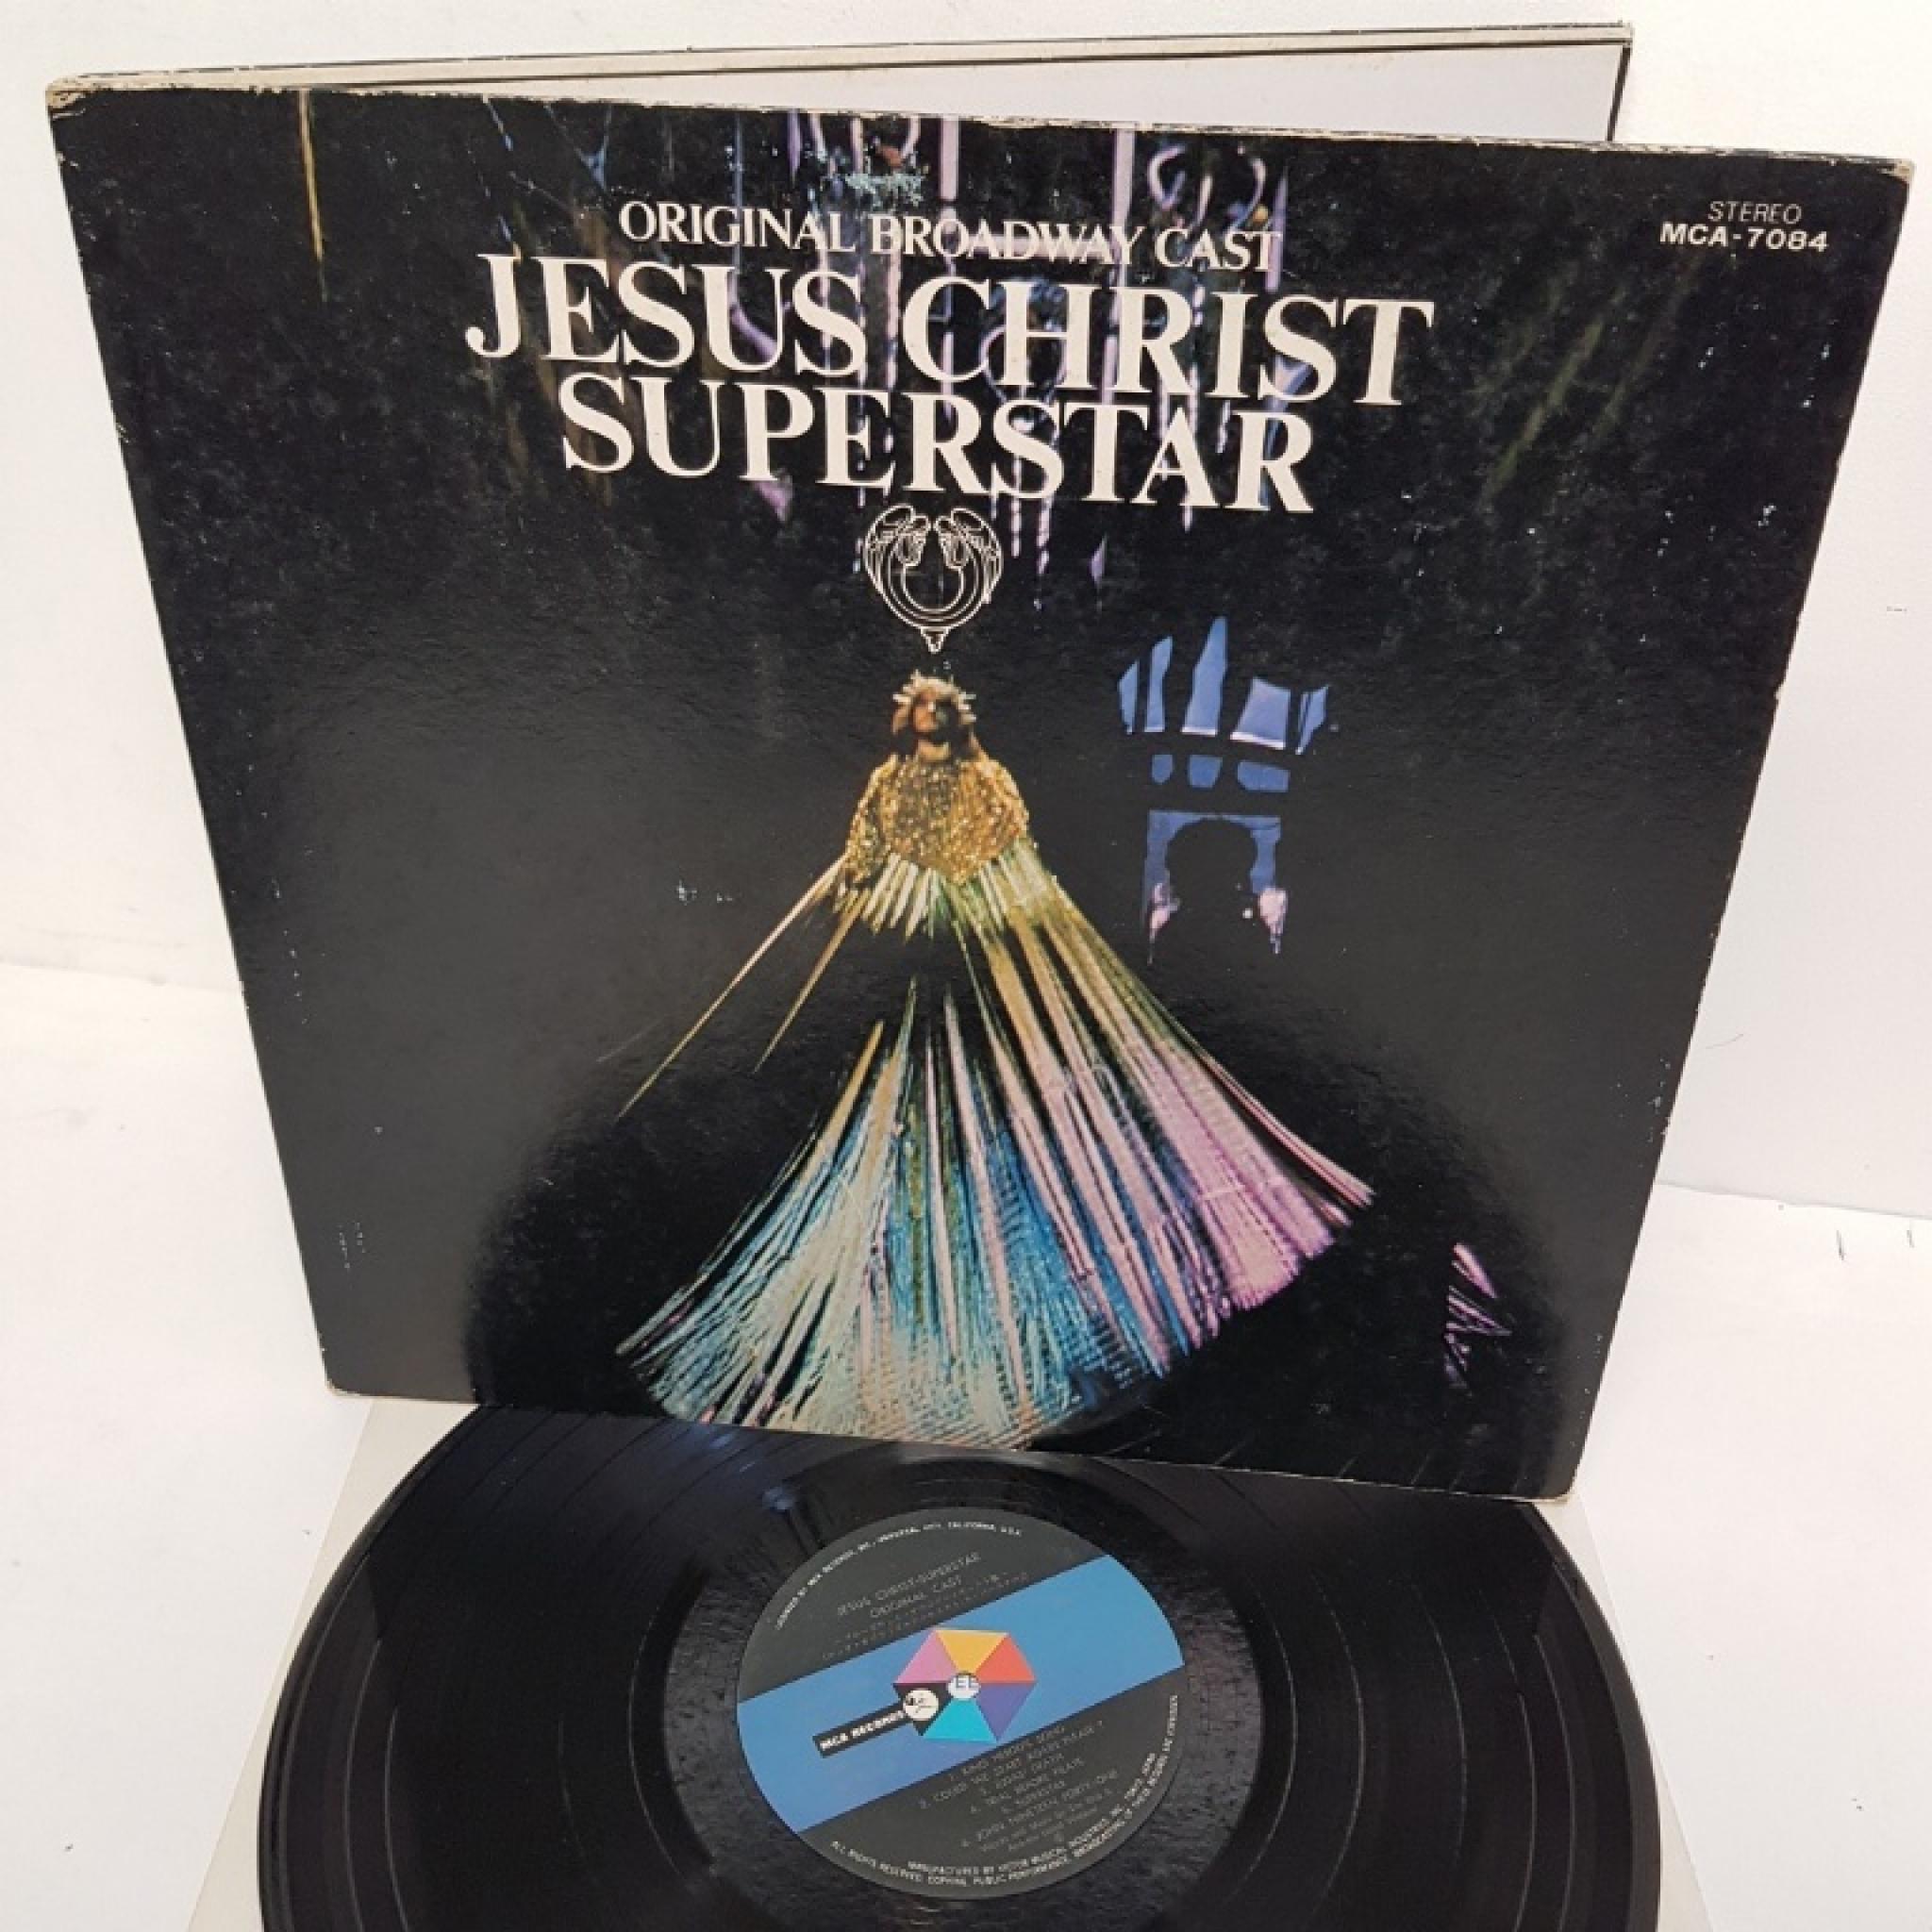 ORIGINAL BROADWAY CAST - JESUS CHRIST SUPERSTAR, MCA-7084, 12